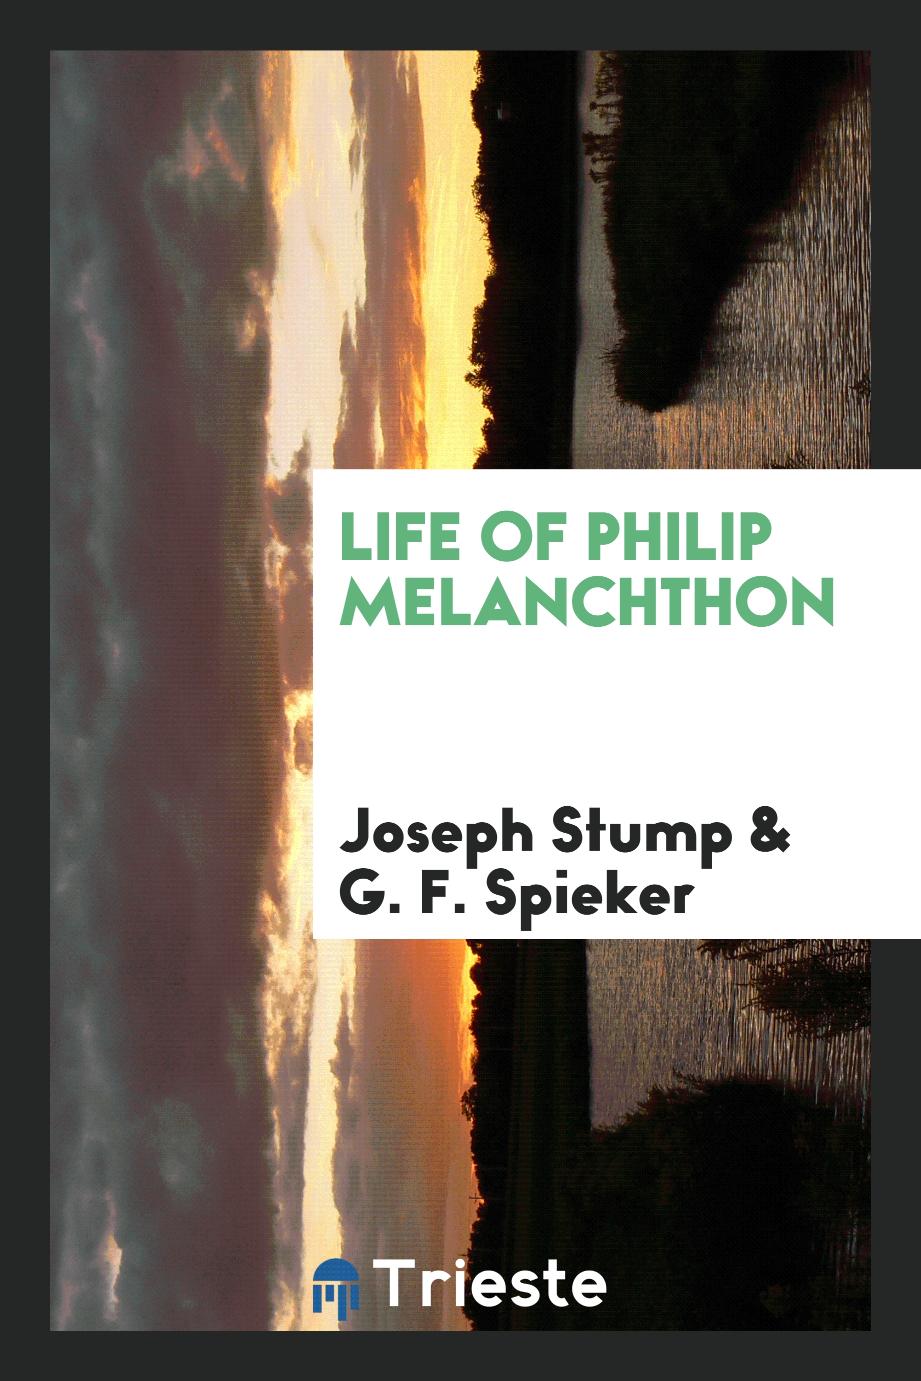 Life of Philip Melanchthon